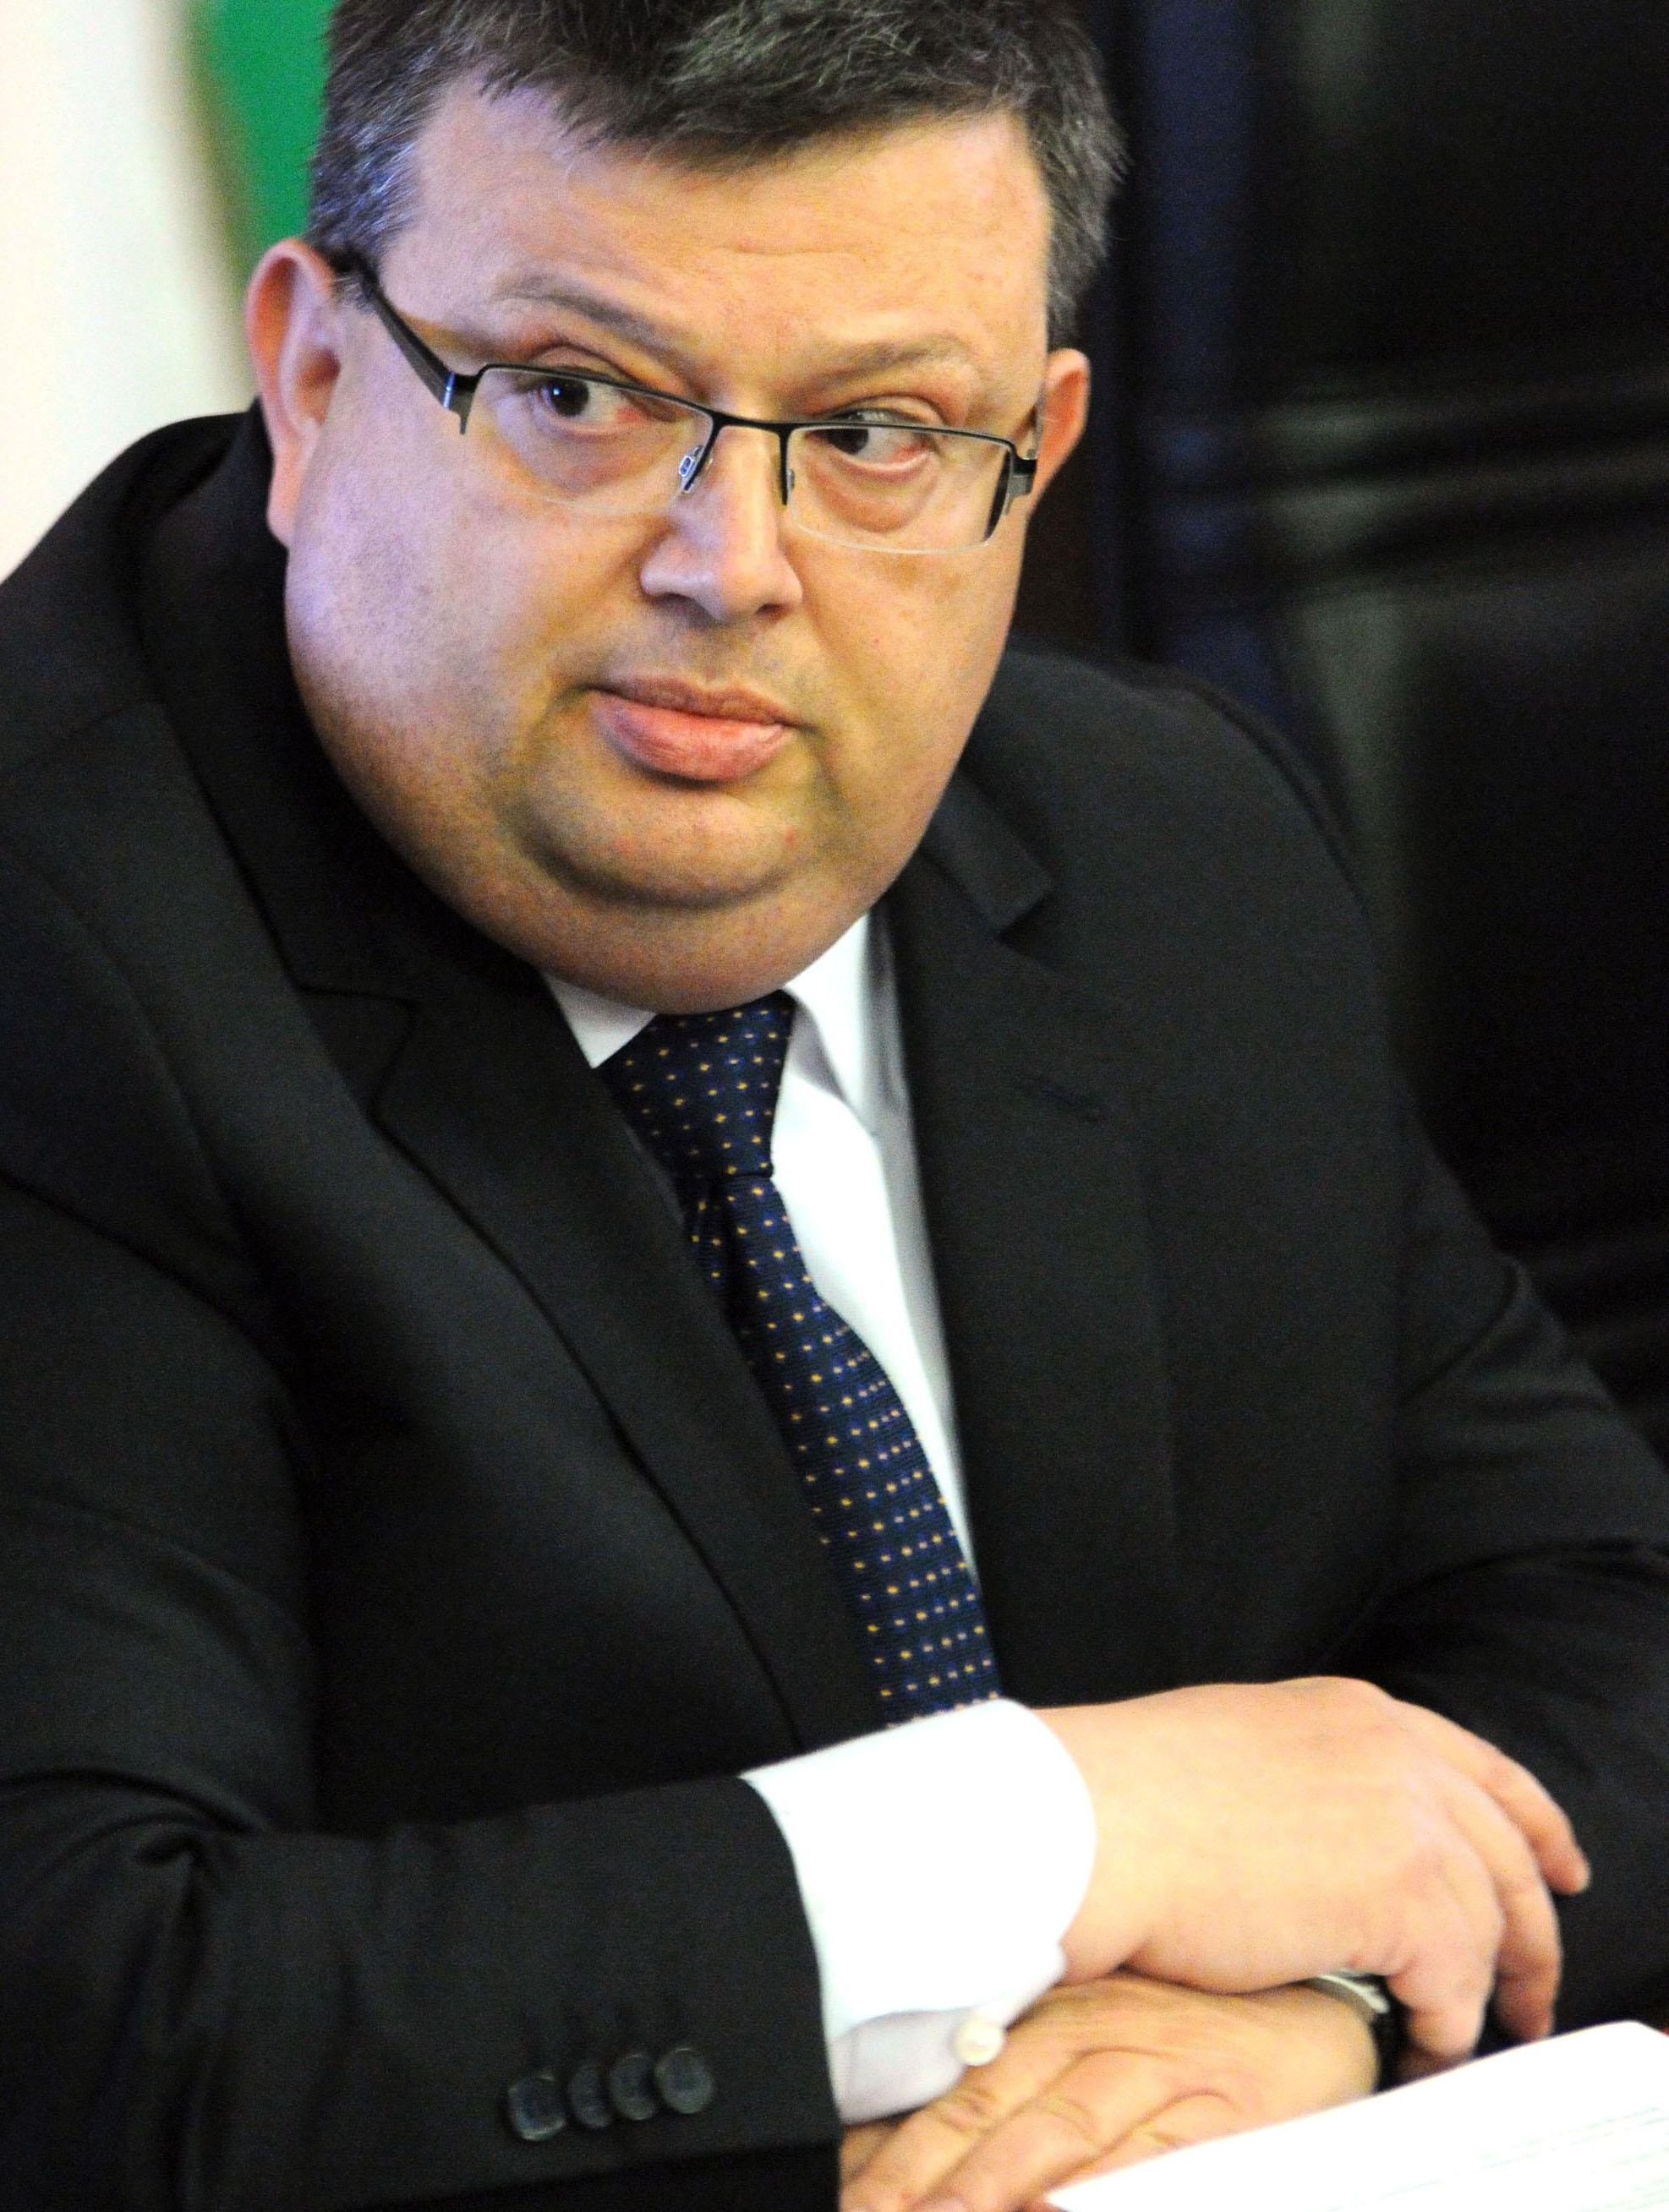 Цацаров скастри соцдепутат, че пресира прокурор в Асеновград